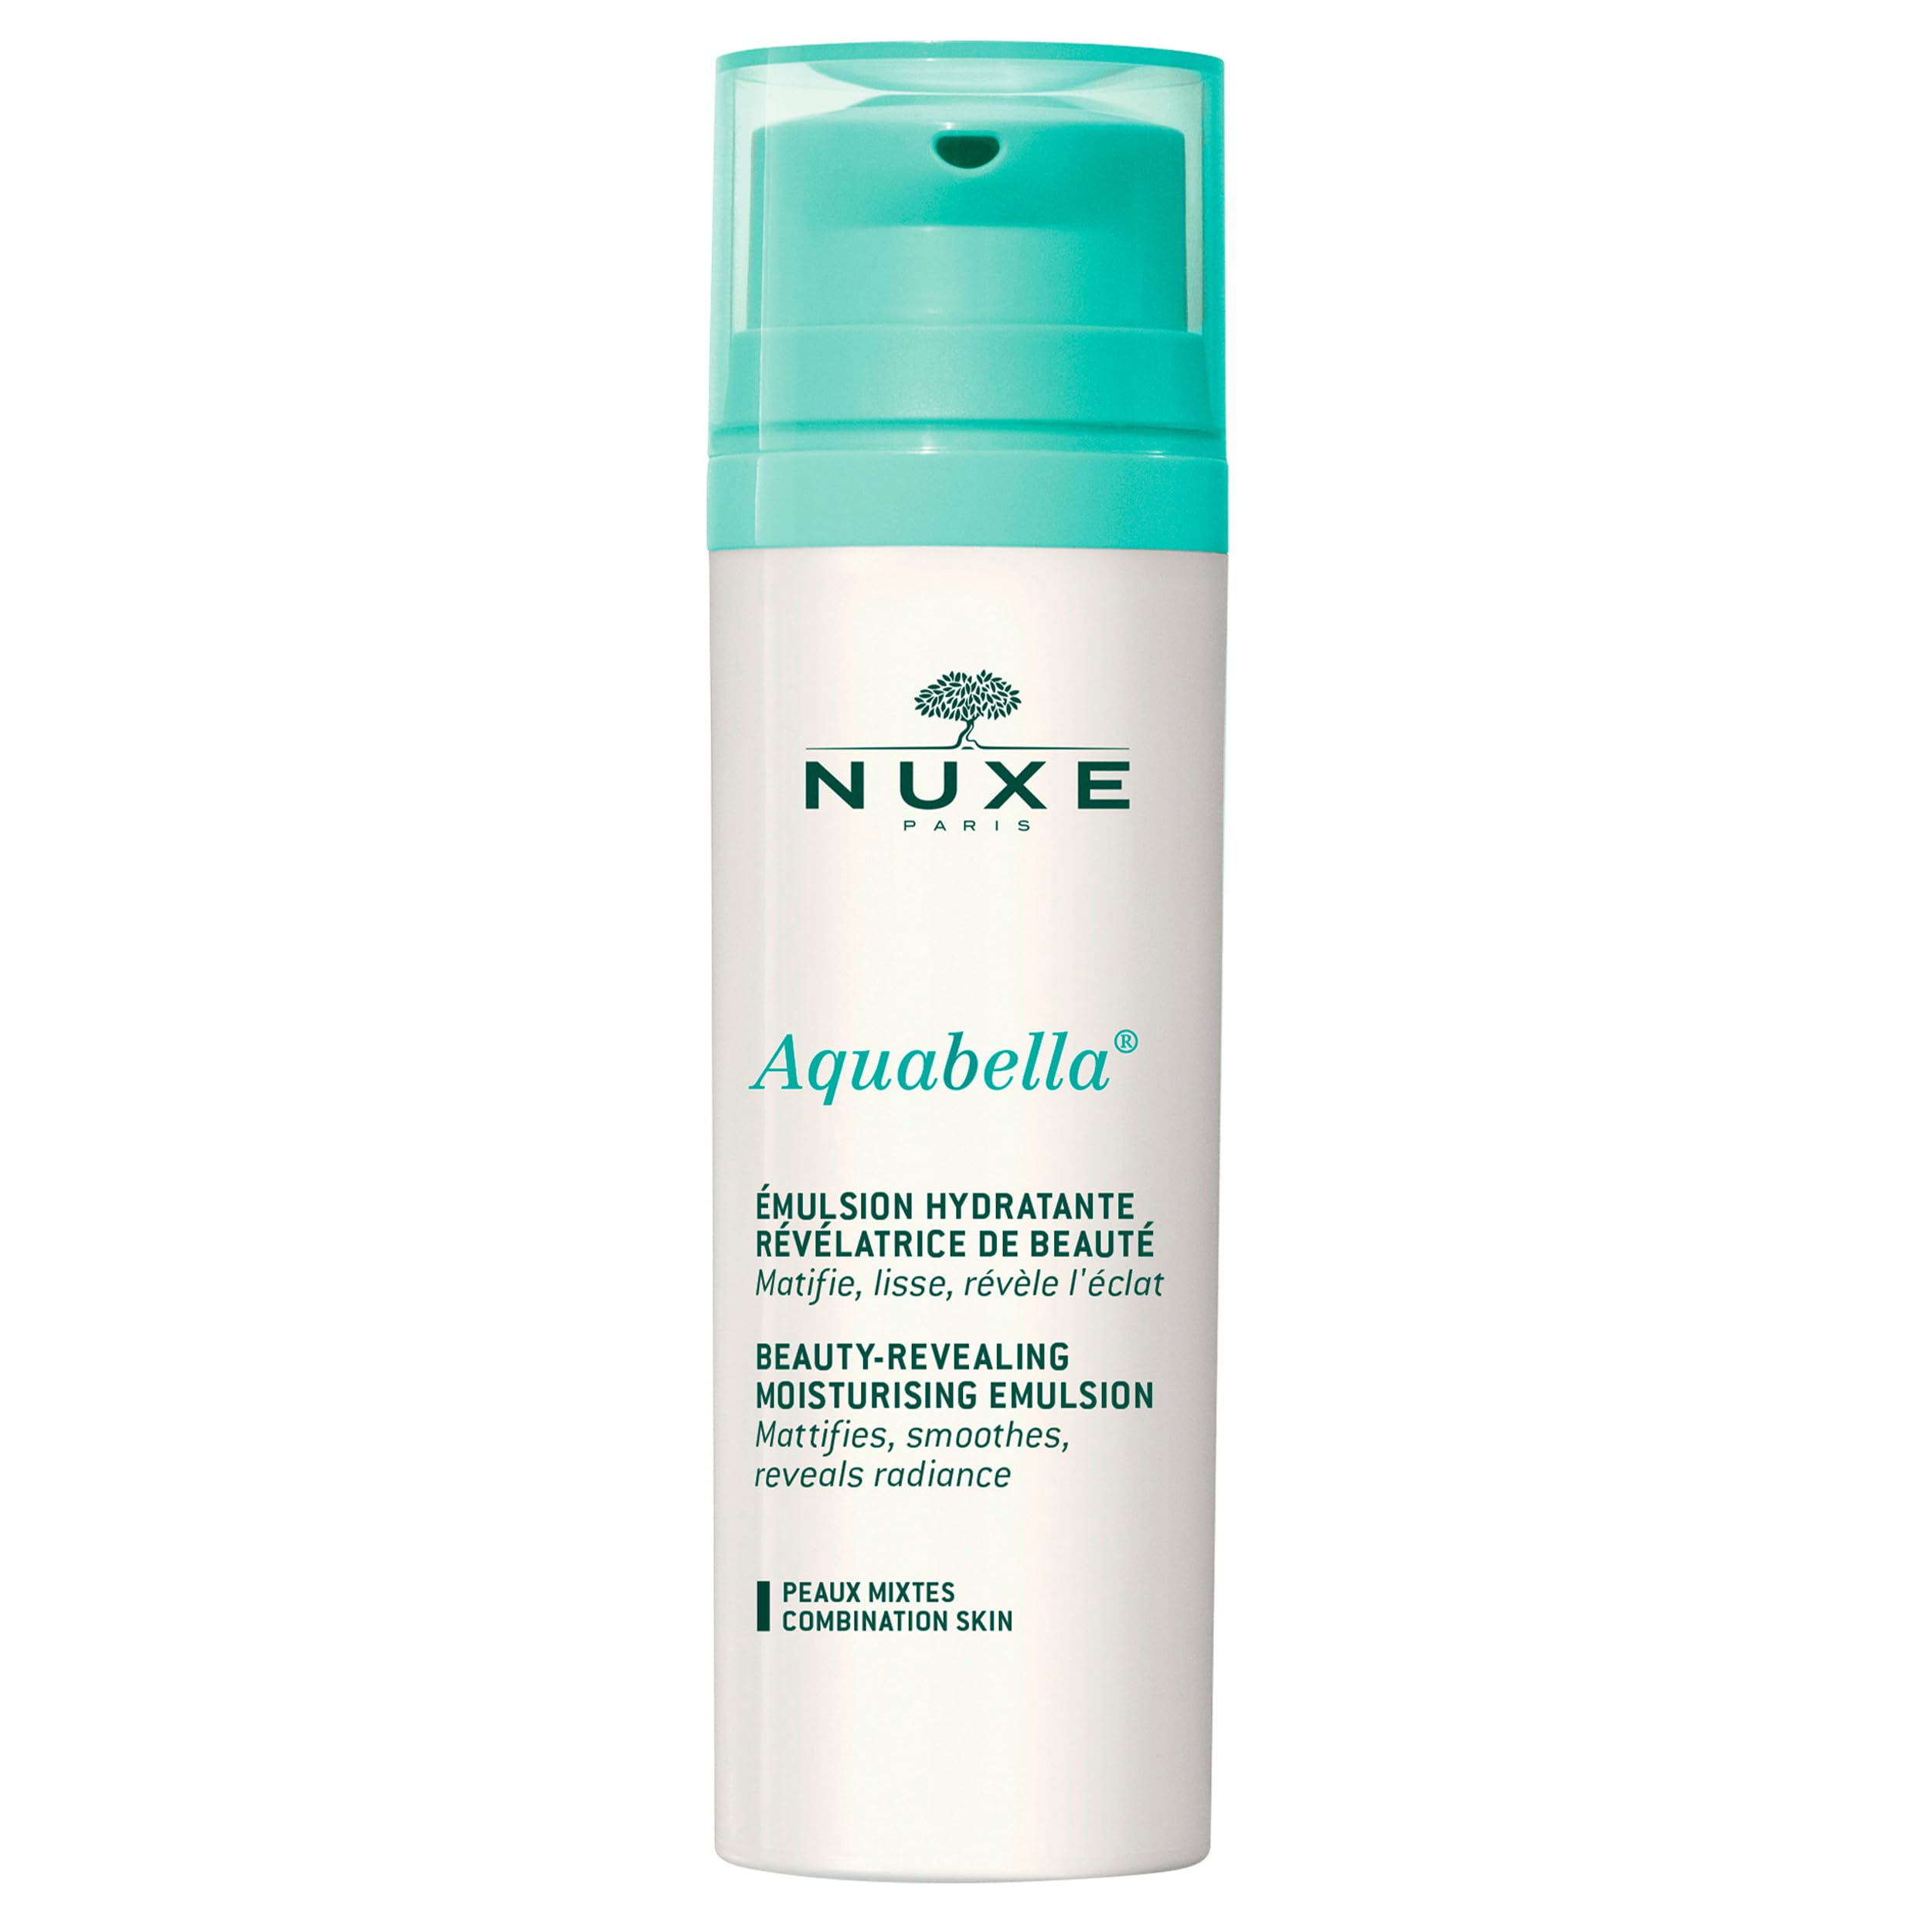 Nuxe Aquabella Beauty Revealing feuchtigkeitsspendende Emulsion, 50 ml, 2 Stück